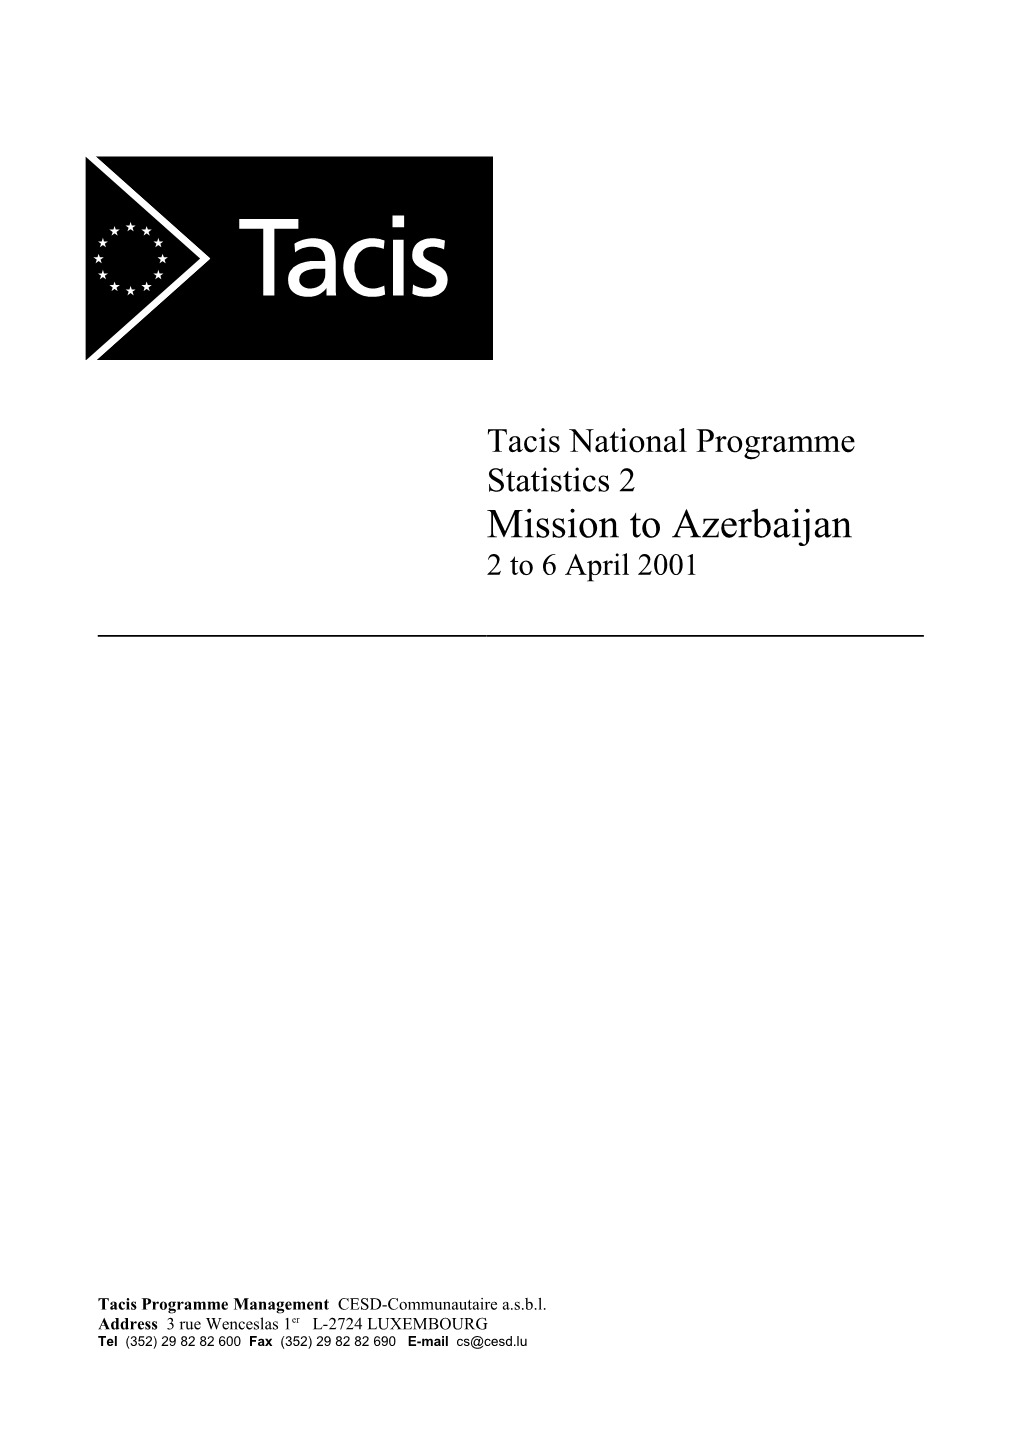 Mission Report of the SRA to Azerbaijan April 2001